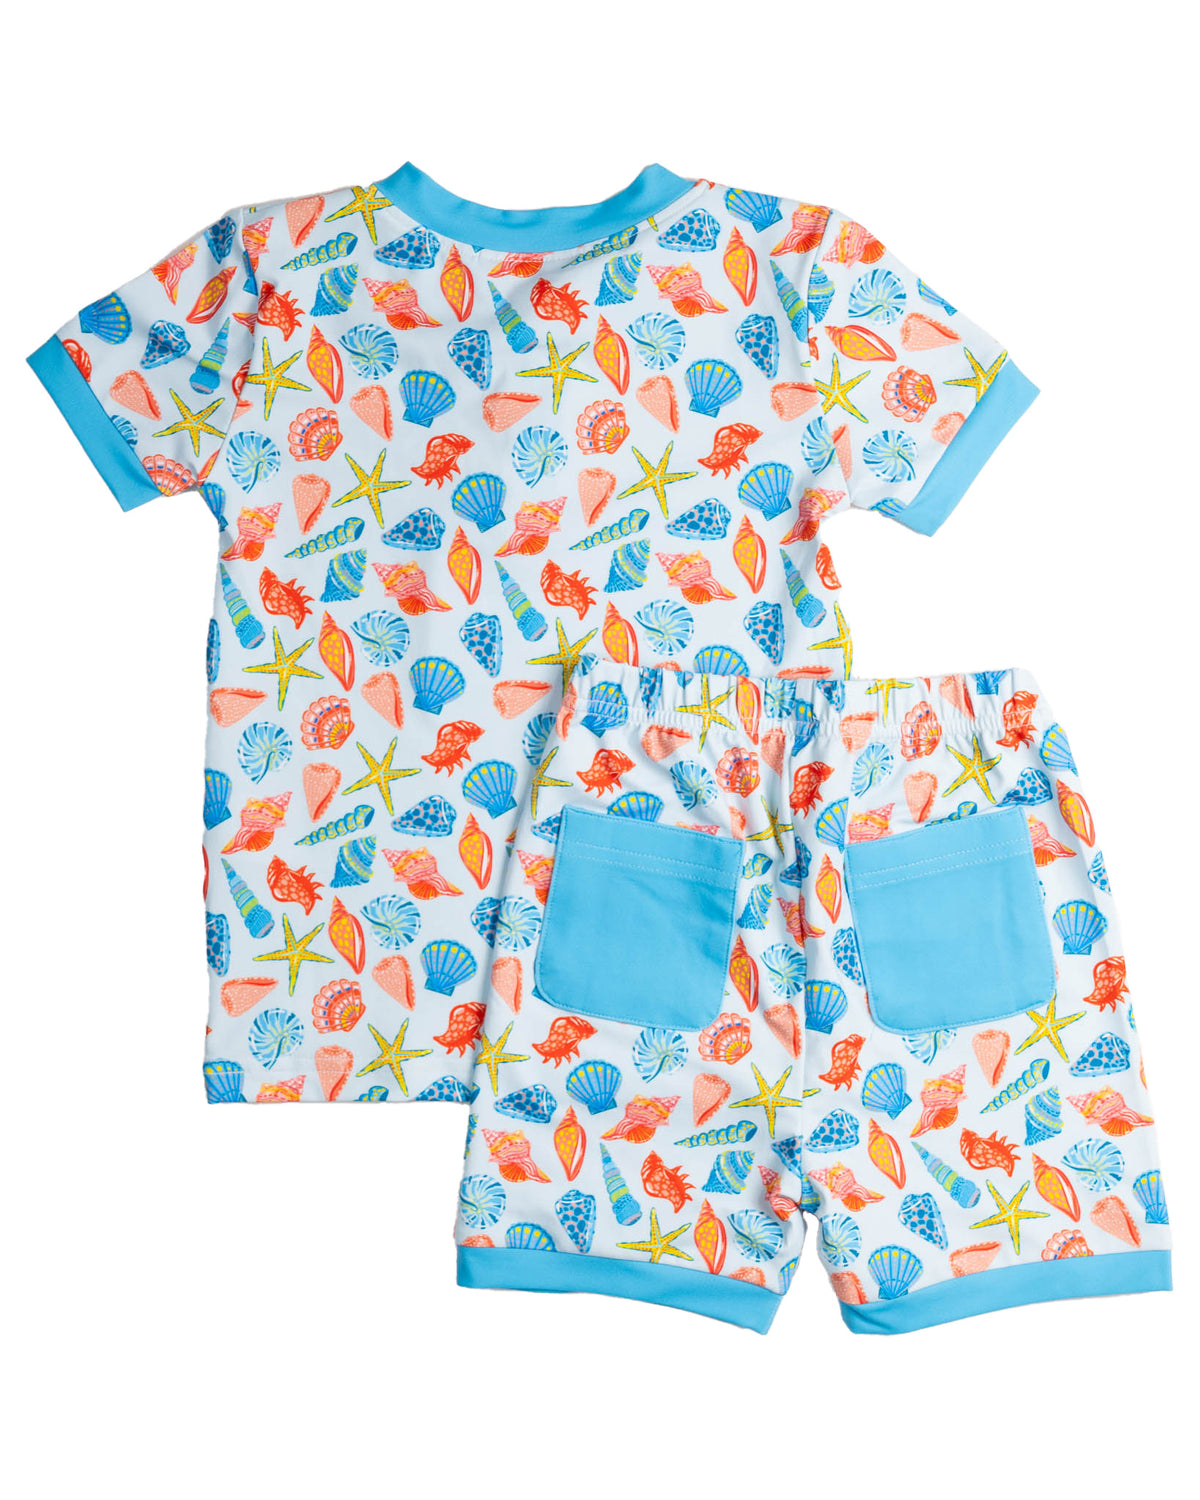 Bright Sea Life Short Sleeve Pajama Set with Blue Trim